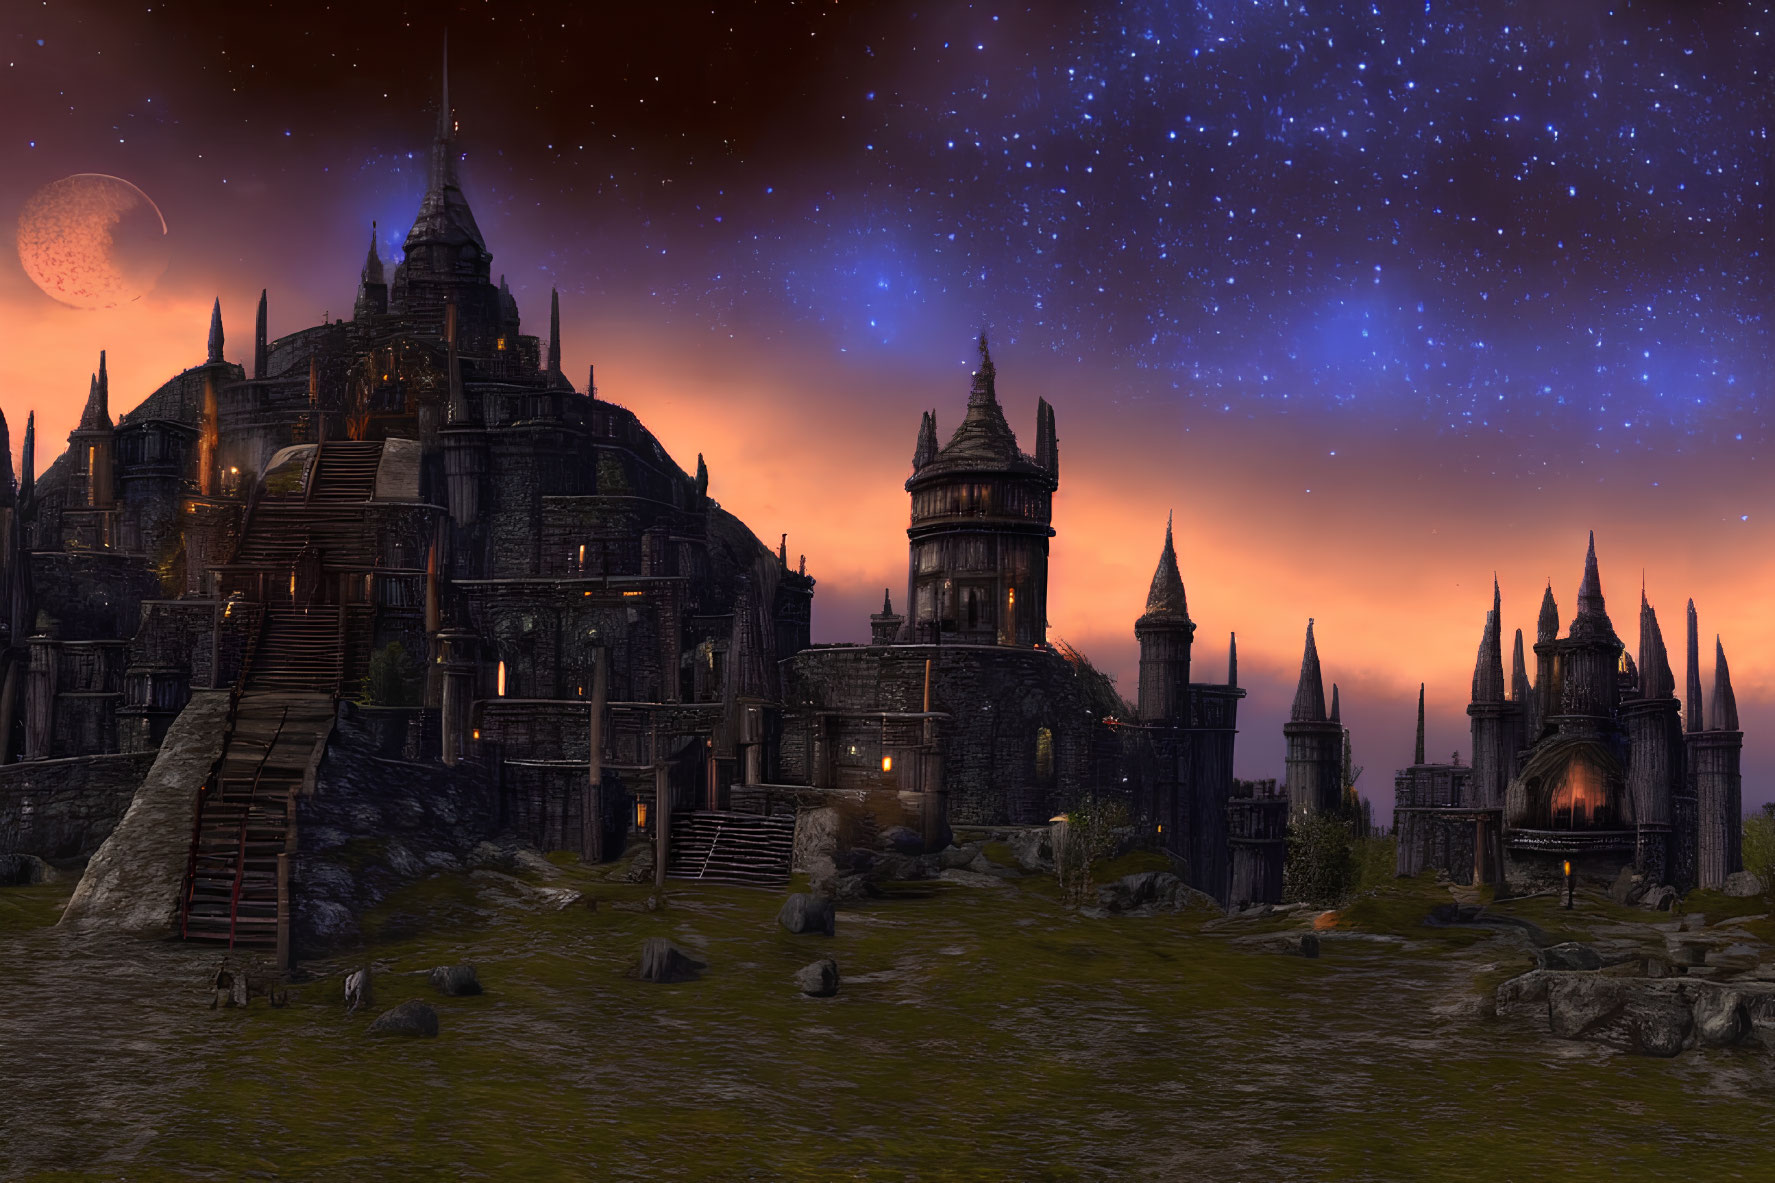 Fantasy medieval castle under starry night sky with moon, orange dusk horizon.